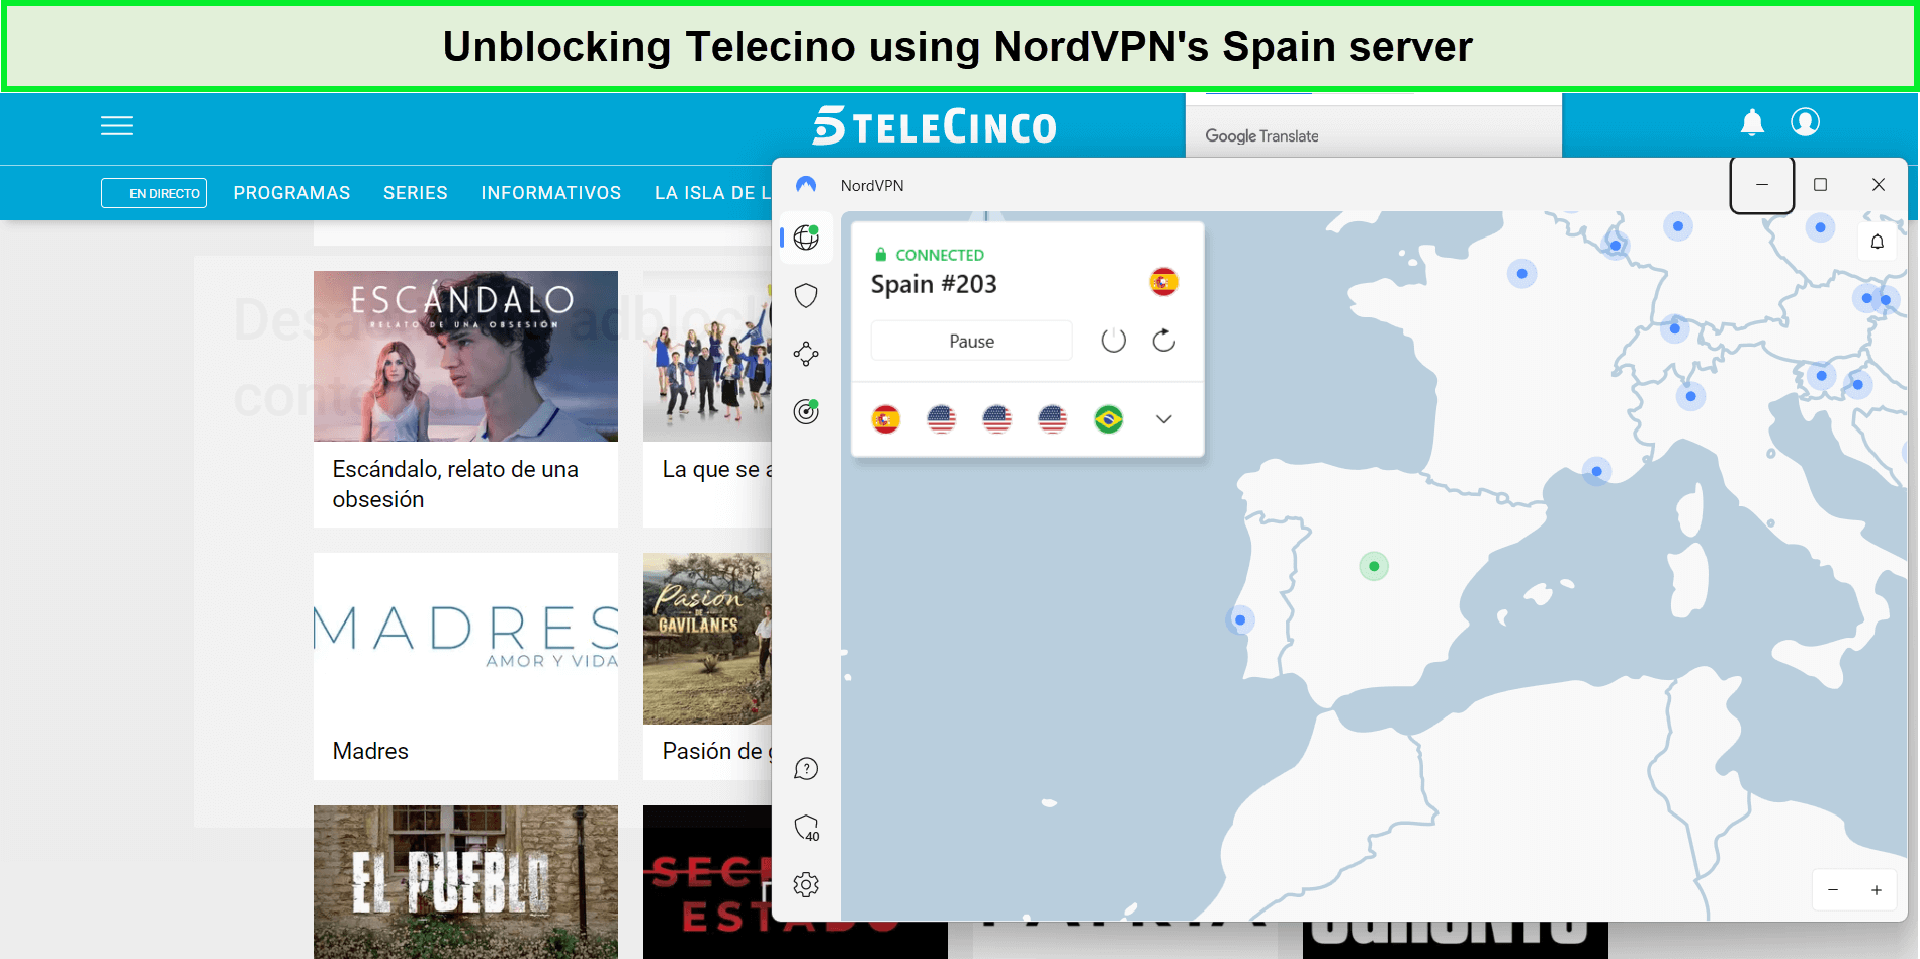 nordvpn-unblocked-telecinco-with-spanish-server-in-Italy